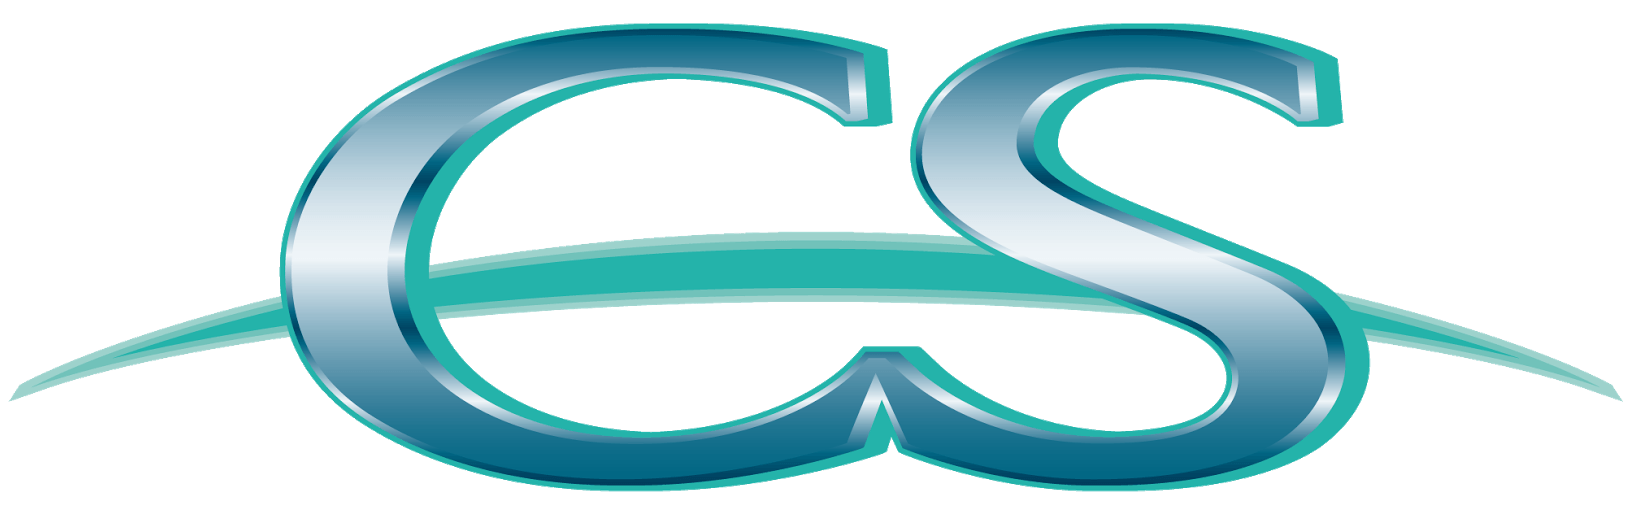 CS Logo - File:CS Communication & Systems Logo.png - Wikimedia Commons